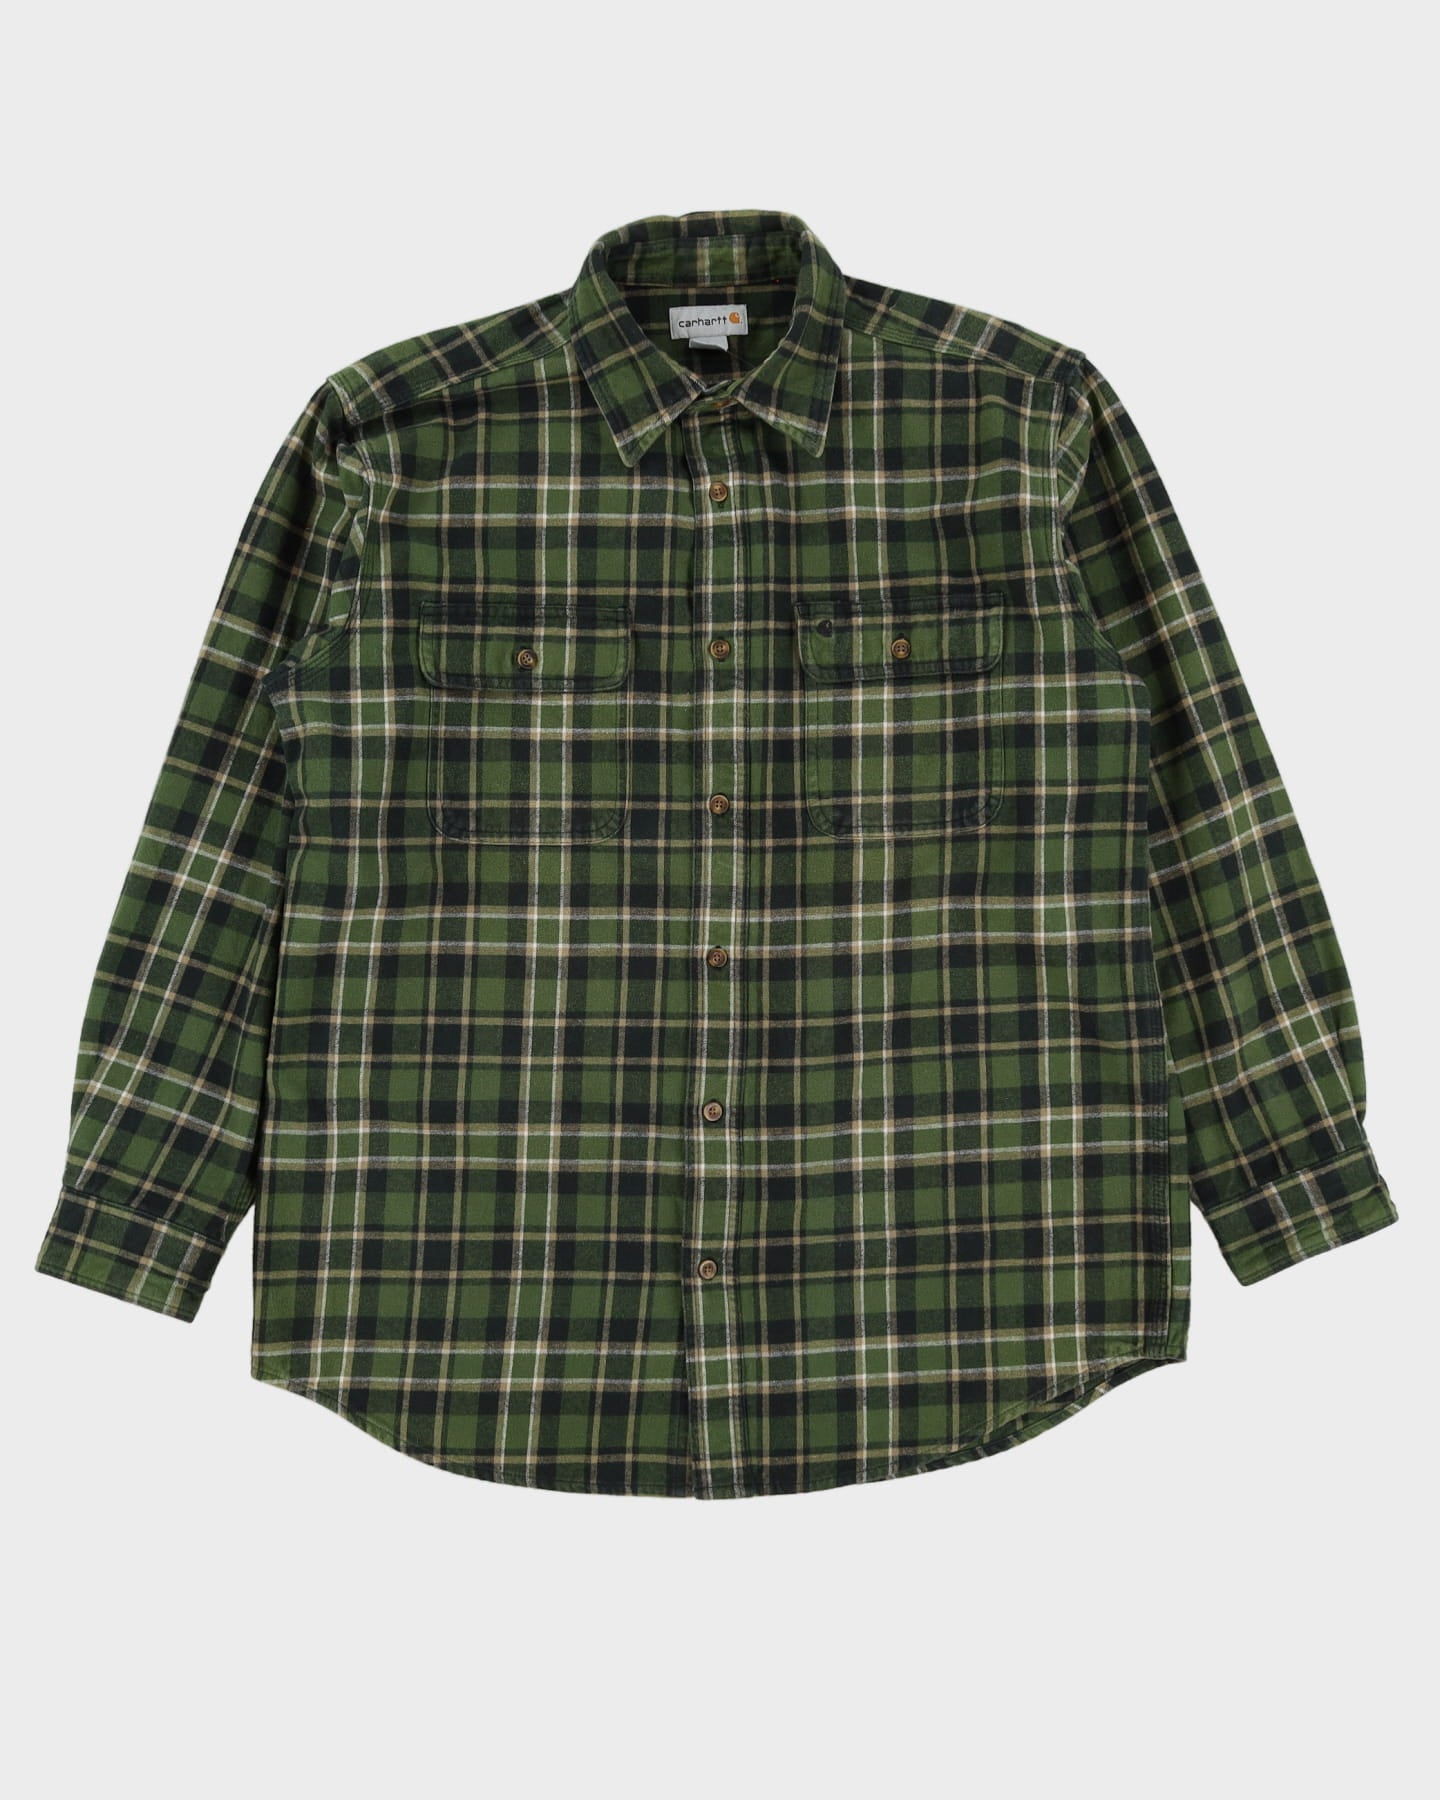 Carhartt Green Checked Flannel Shirt - XL